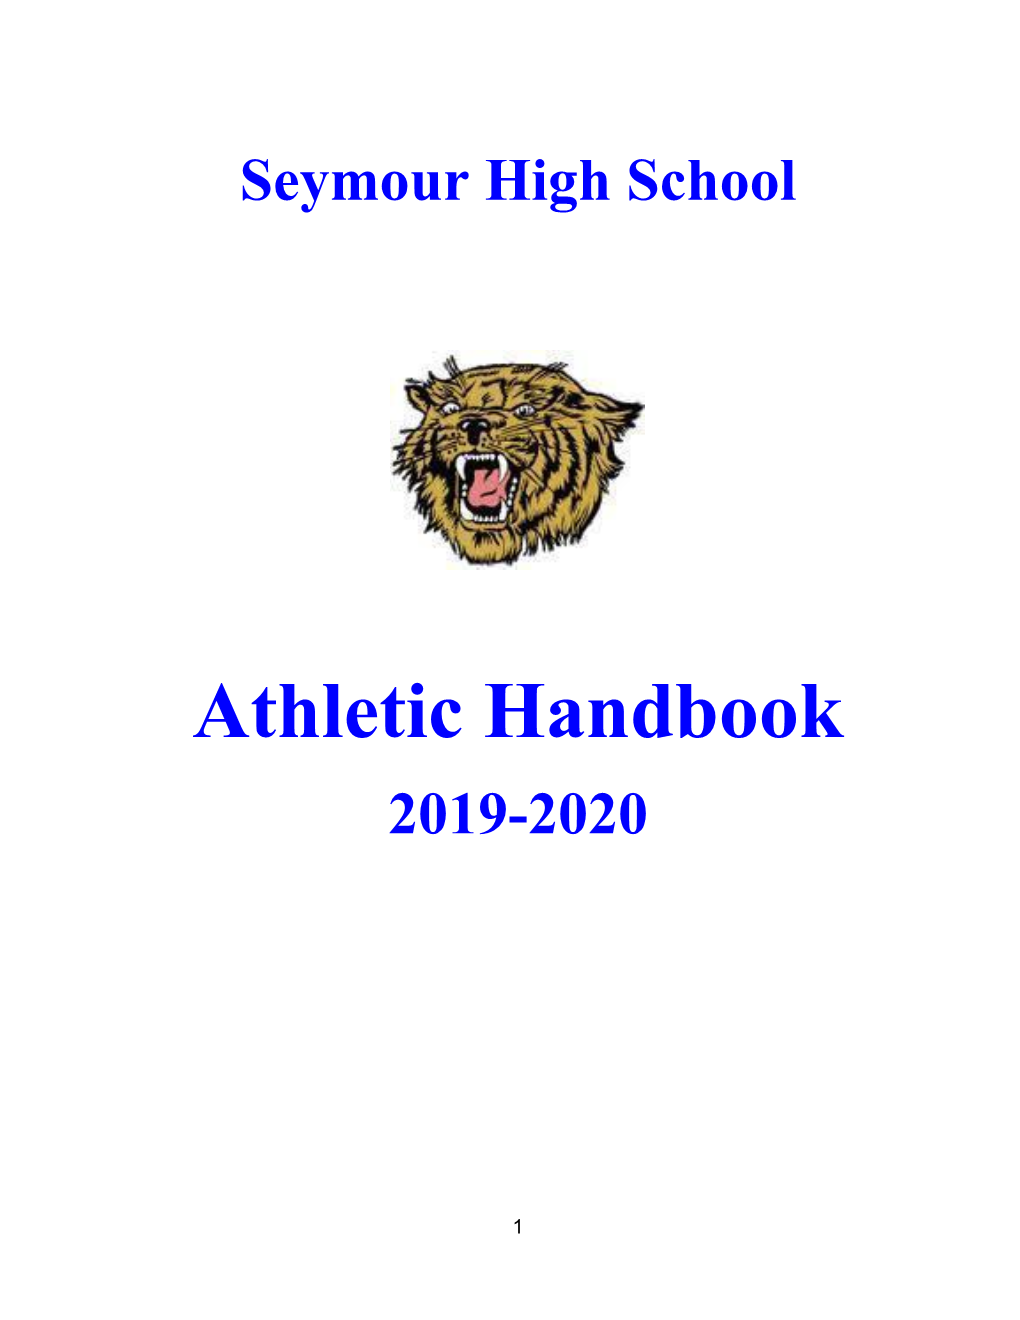 Athletic Handbook